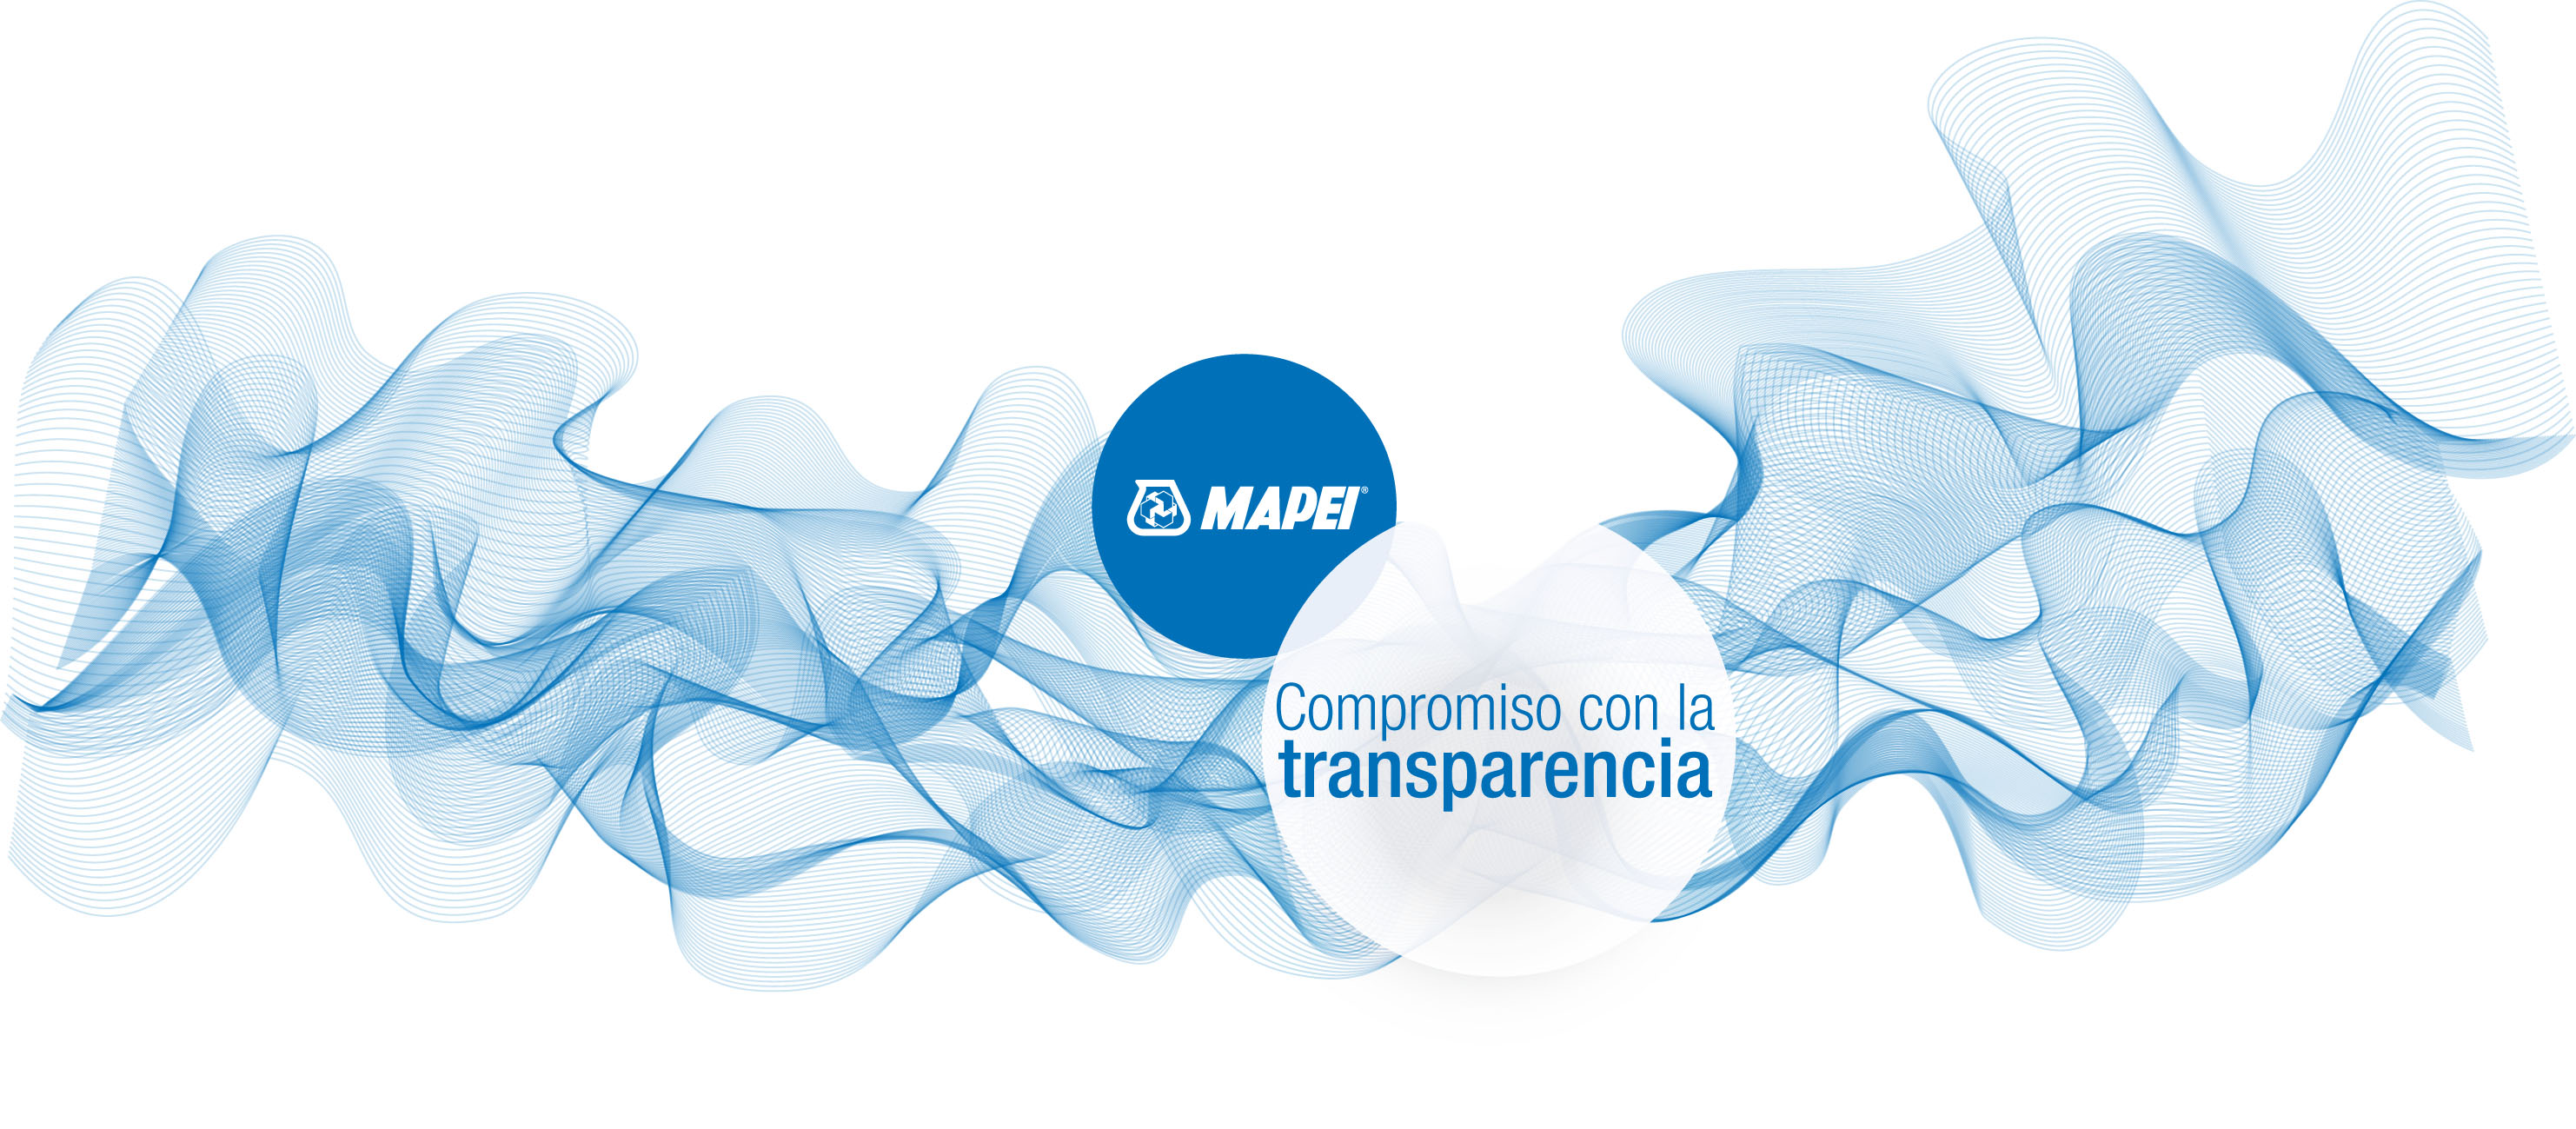 Mapei lanza la campaña  “Compromiso con la transparencia”.